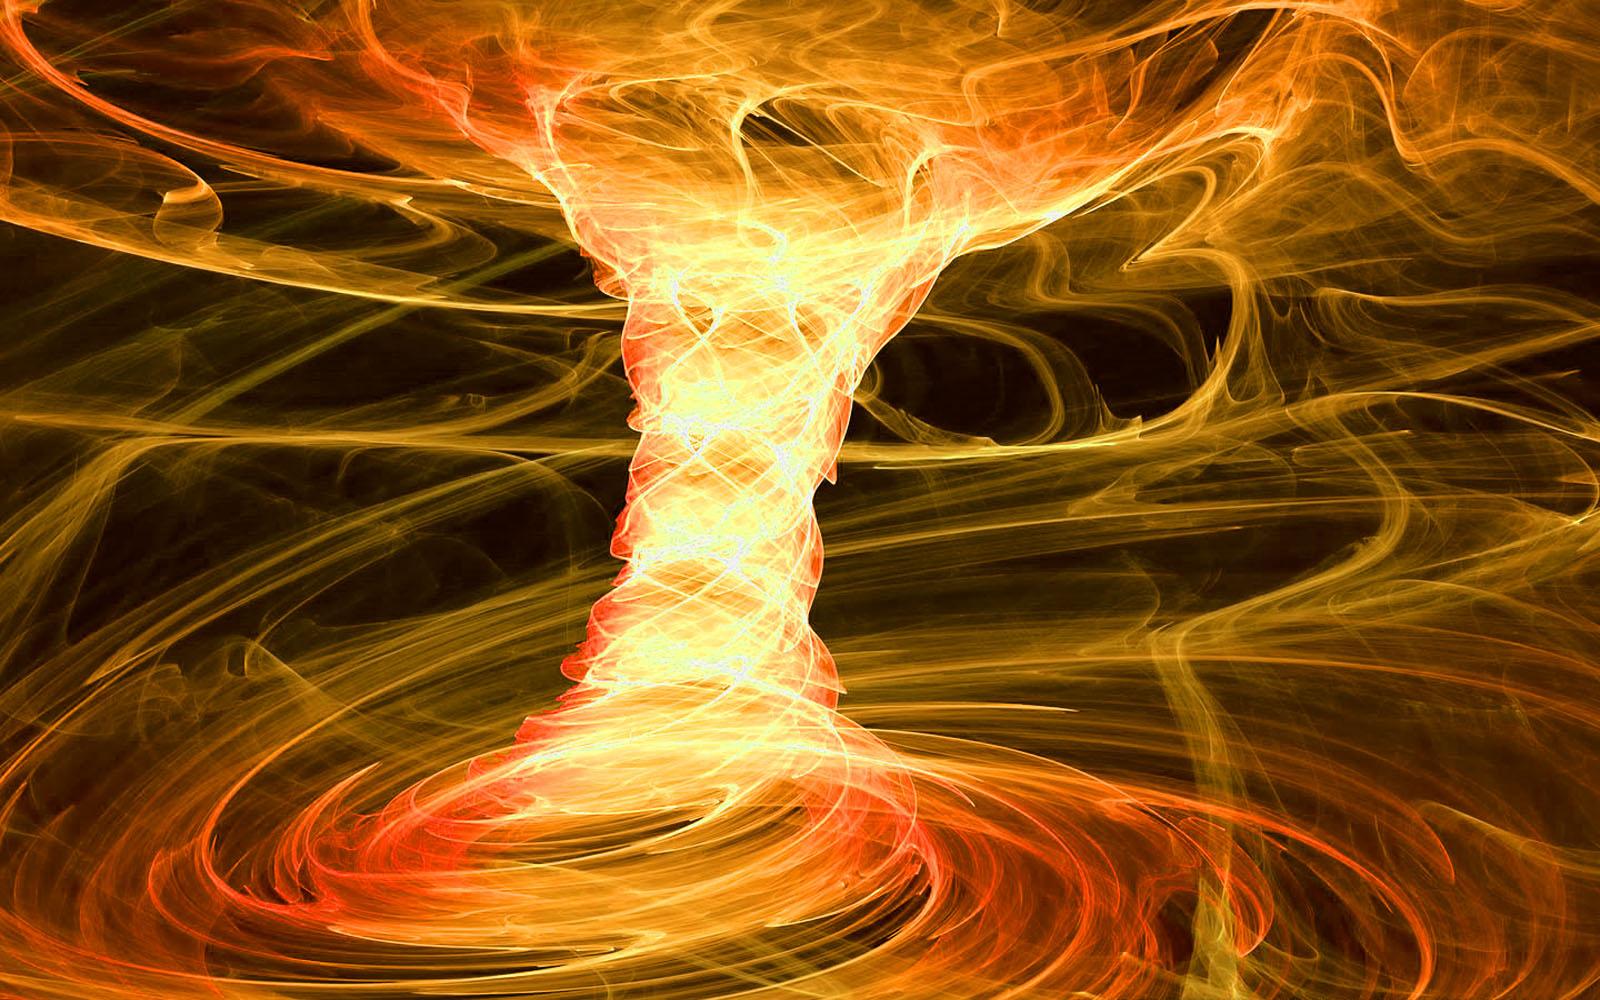 Fire Tornado HD Wallpaper, Background Image